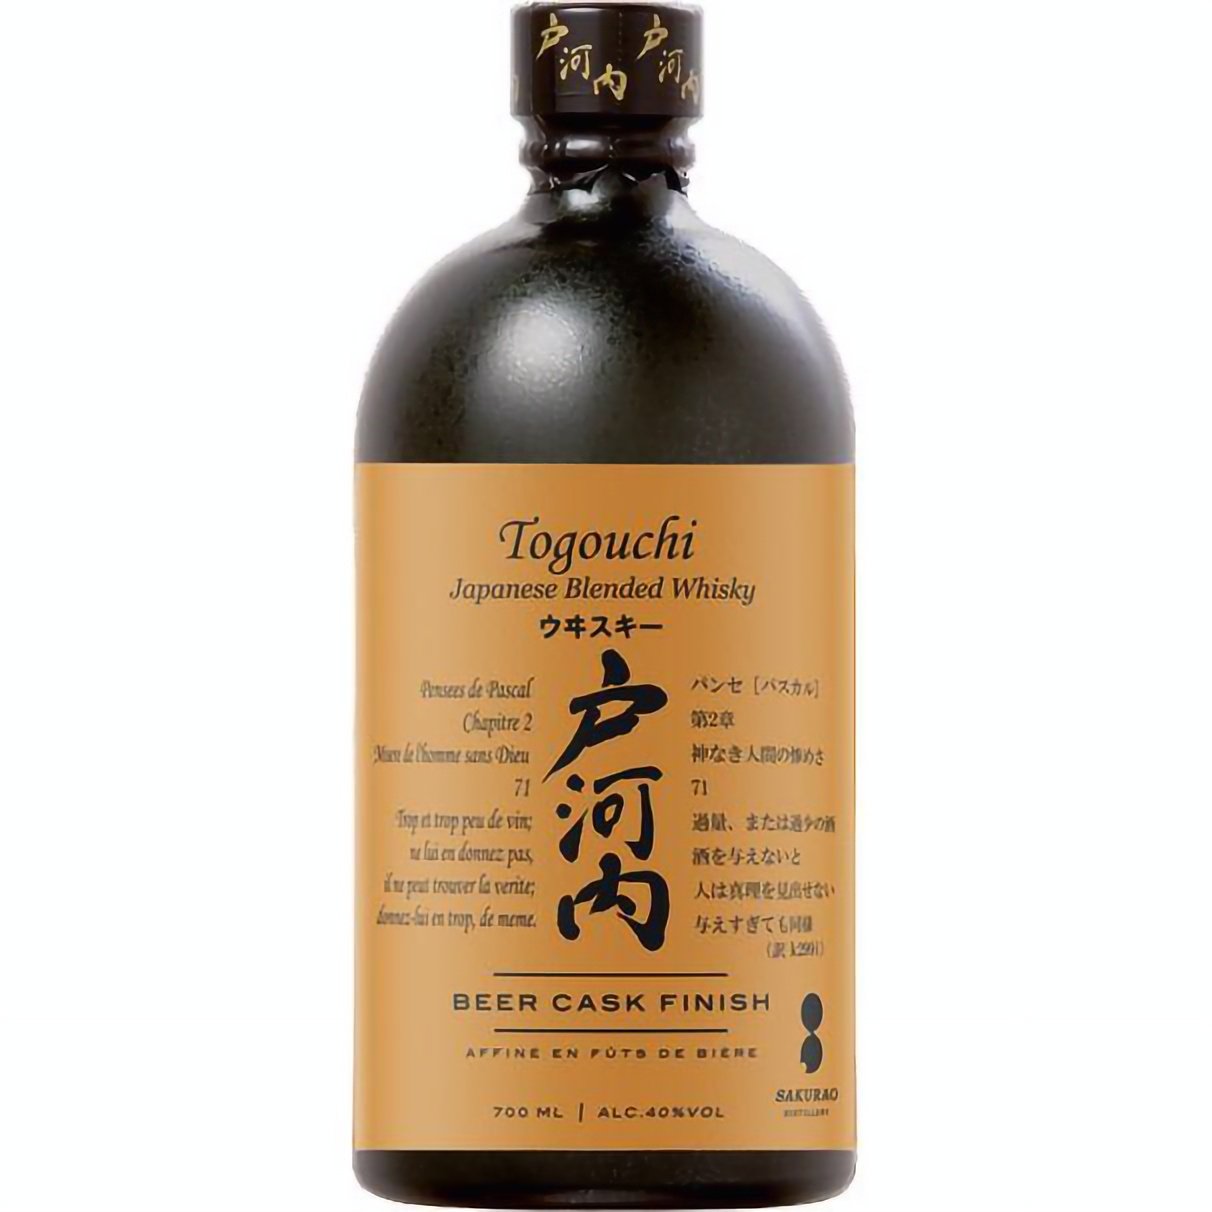 Віскі Togouchi Beer Cask Finish Blended Japanese Whisky, 40%, 0,7 л, у подарунковій упаковці - фото 2